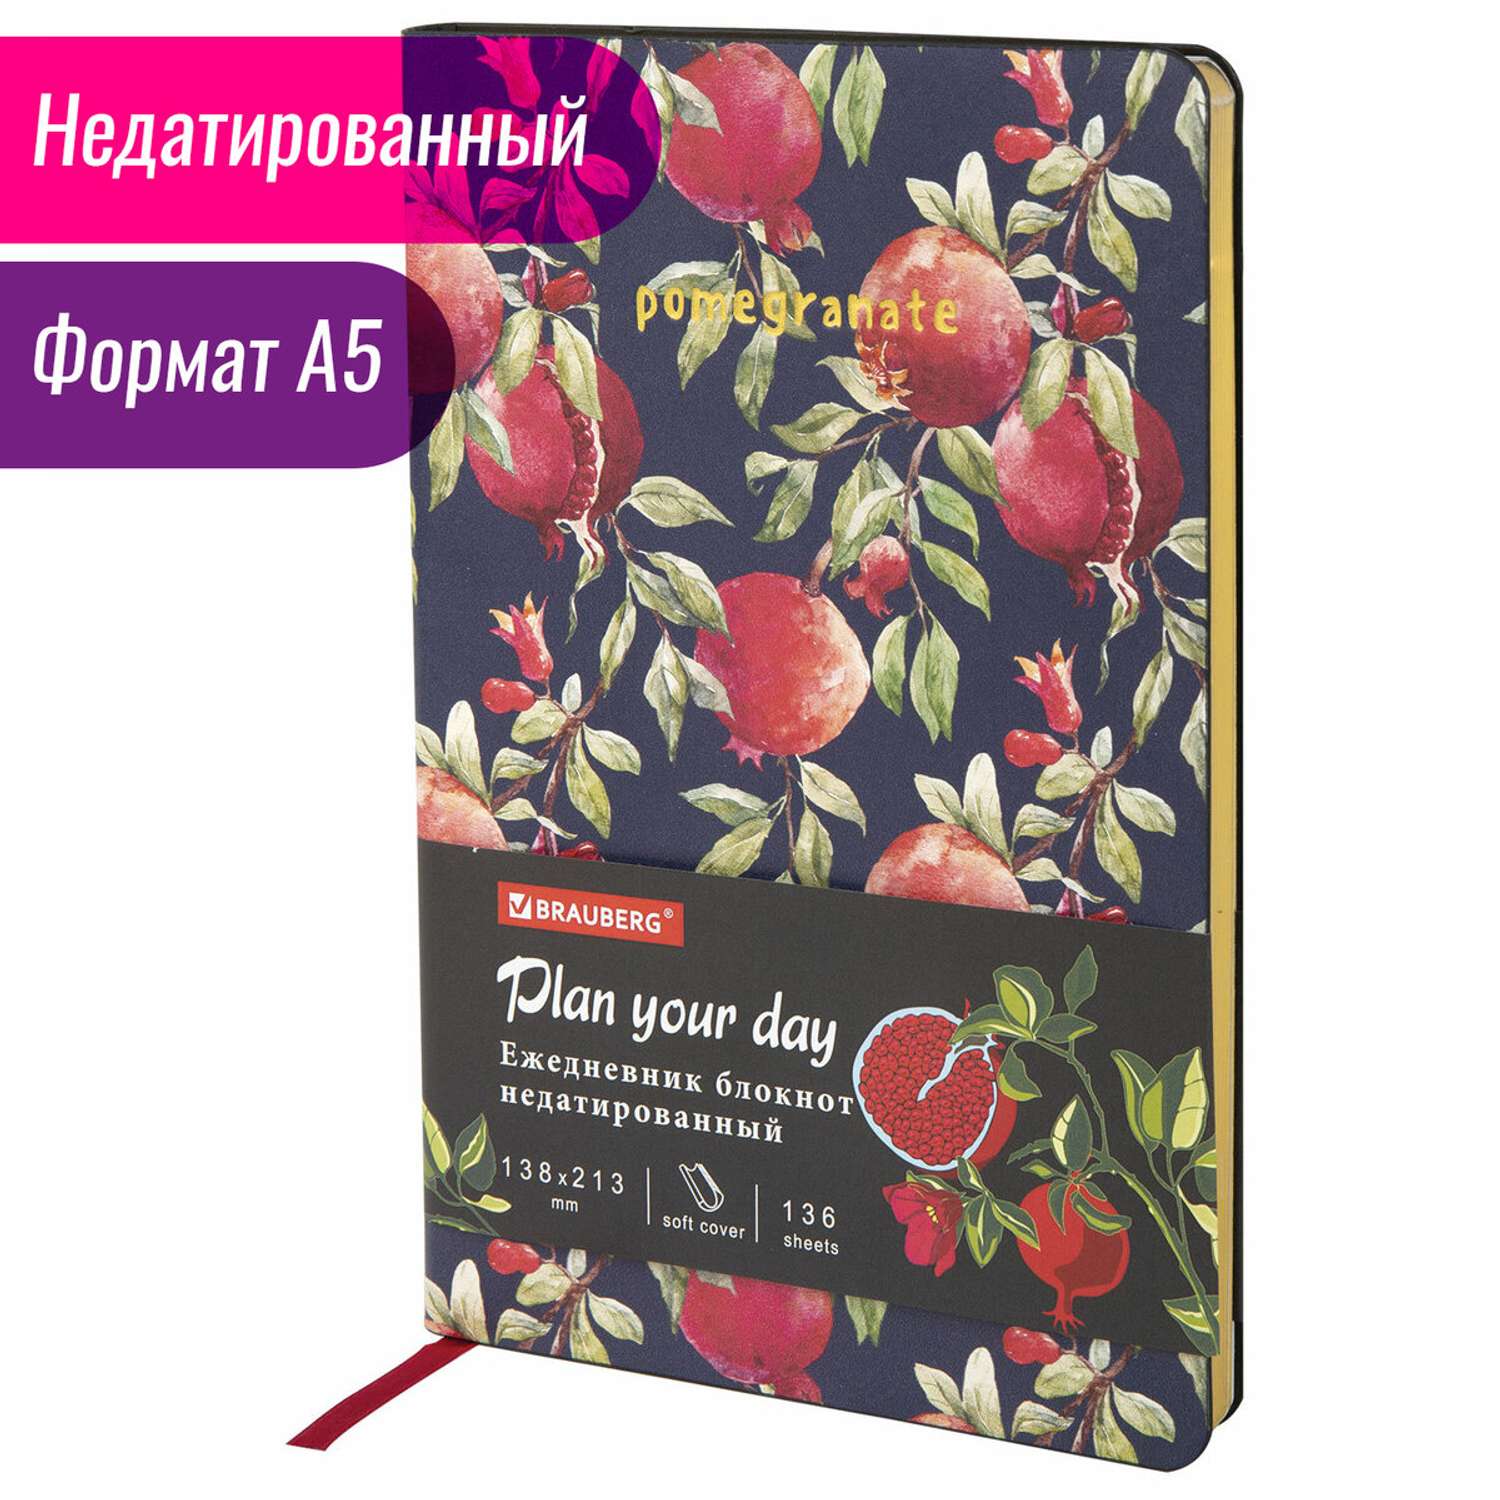 Ежедневник Brauberg недатированный А5 под кожу гибкий 136 листов Pomegranate - фото 2